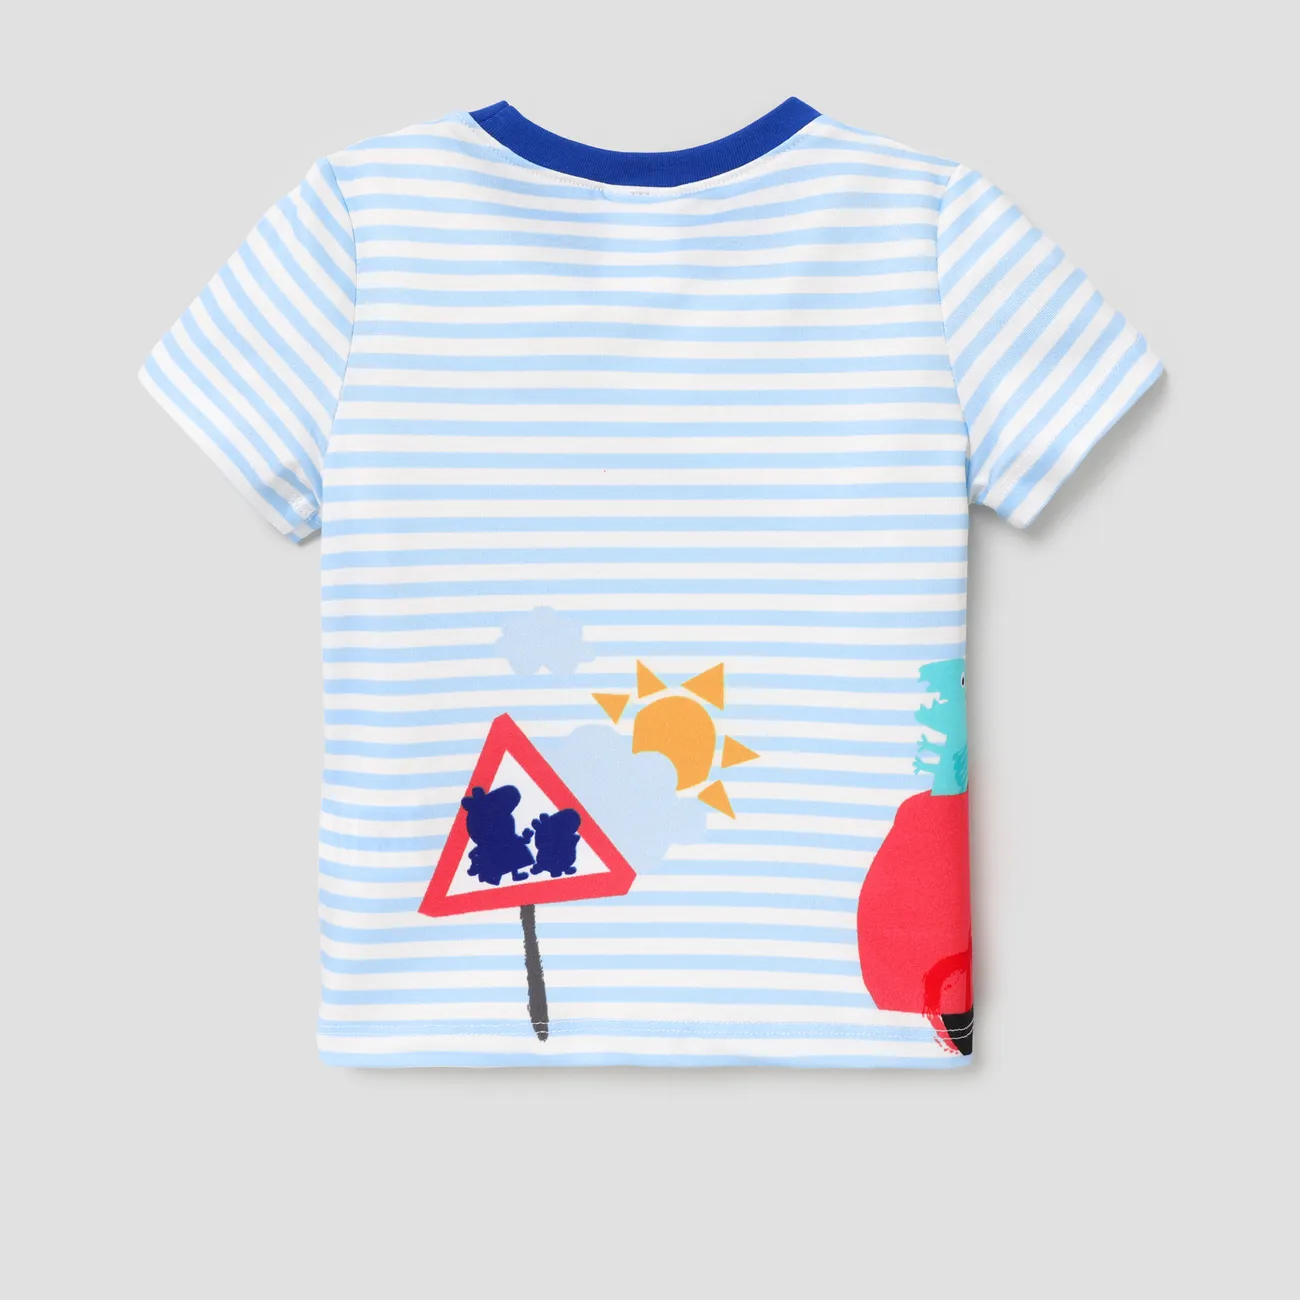 Peppa Pig Kleinkinder Unisex Kindlich Kurzärmelig T-Shirts blau big image 1